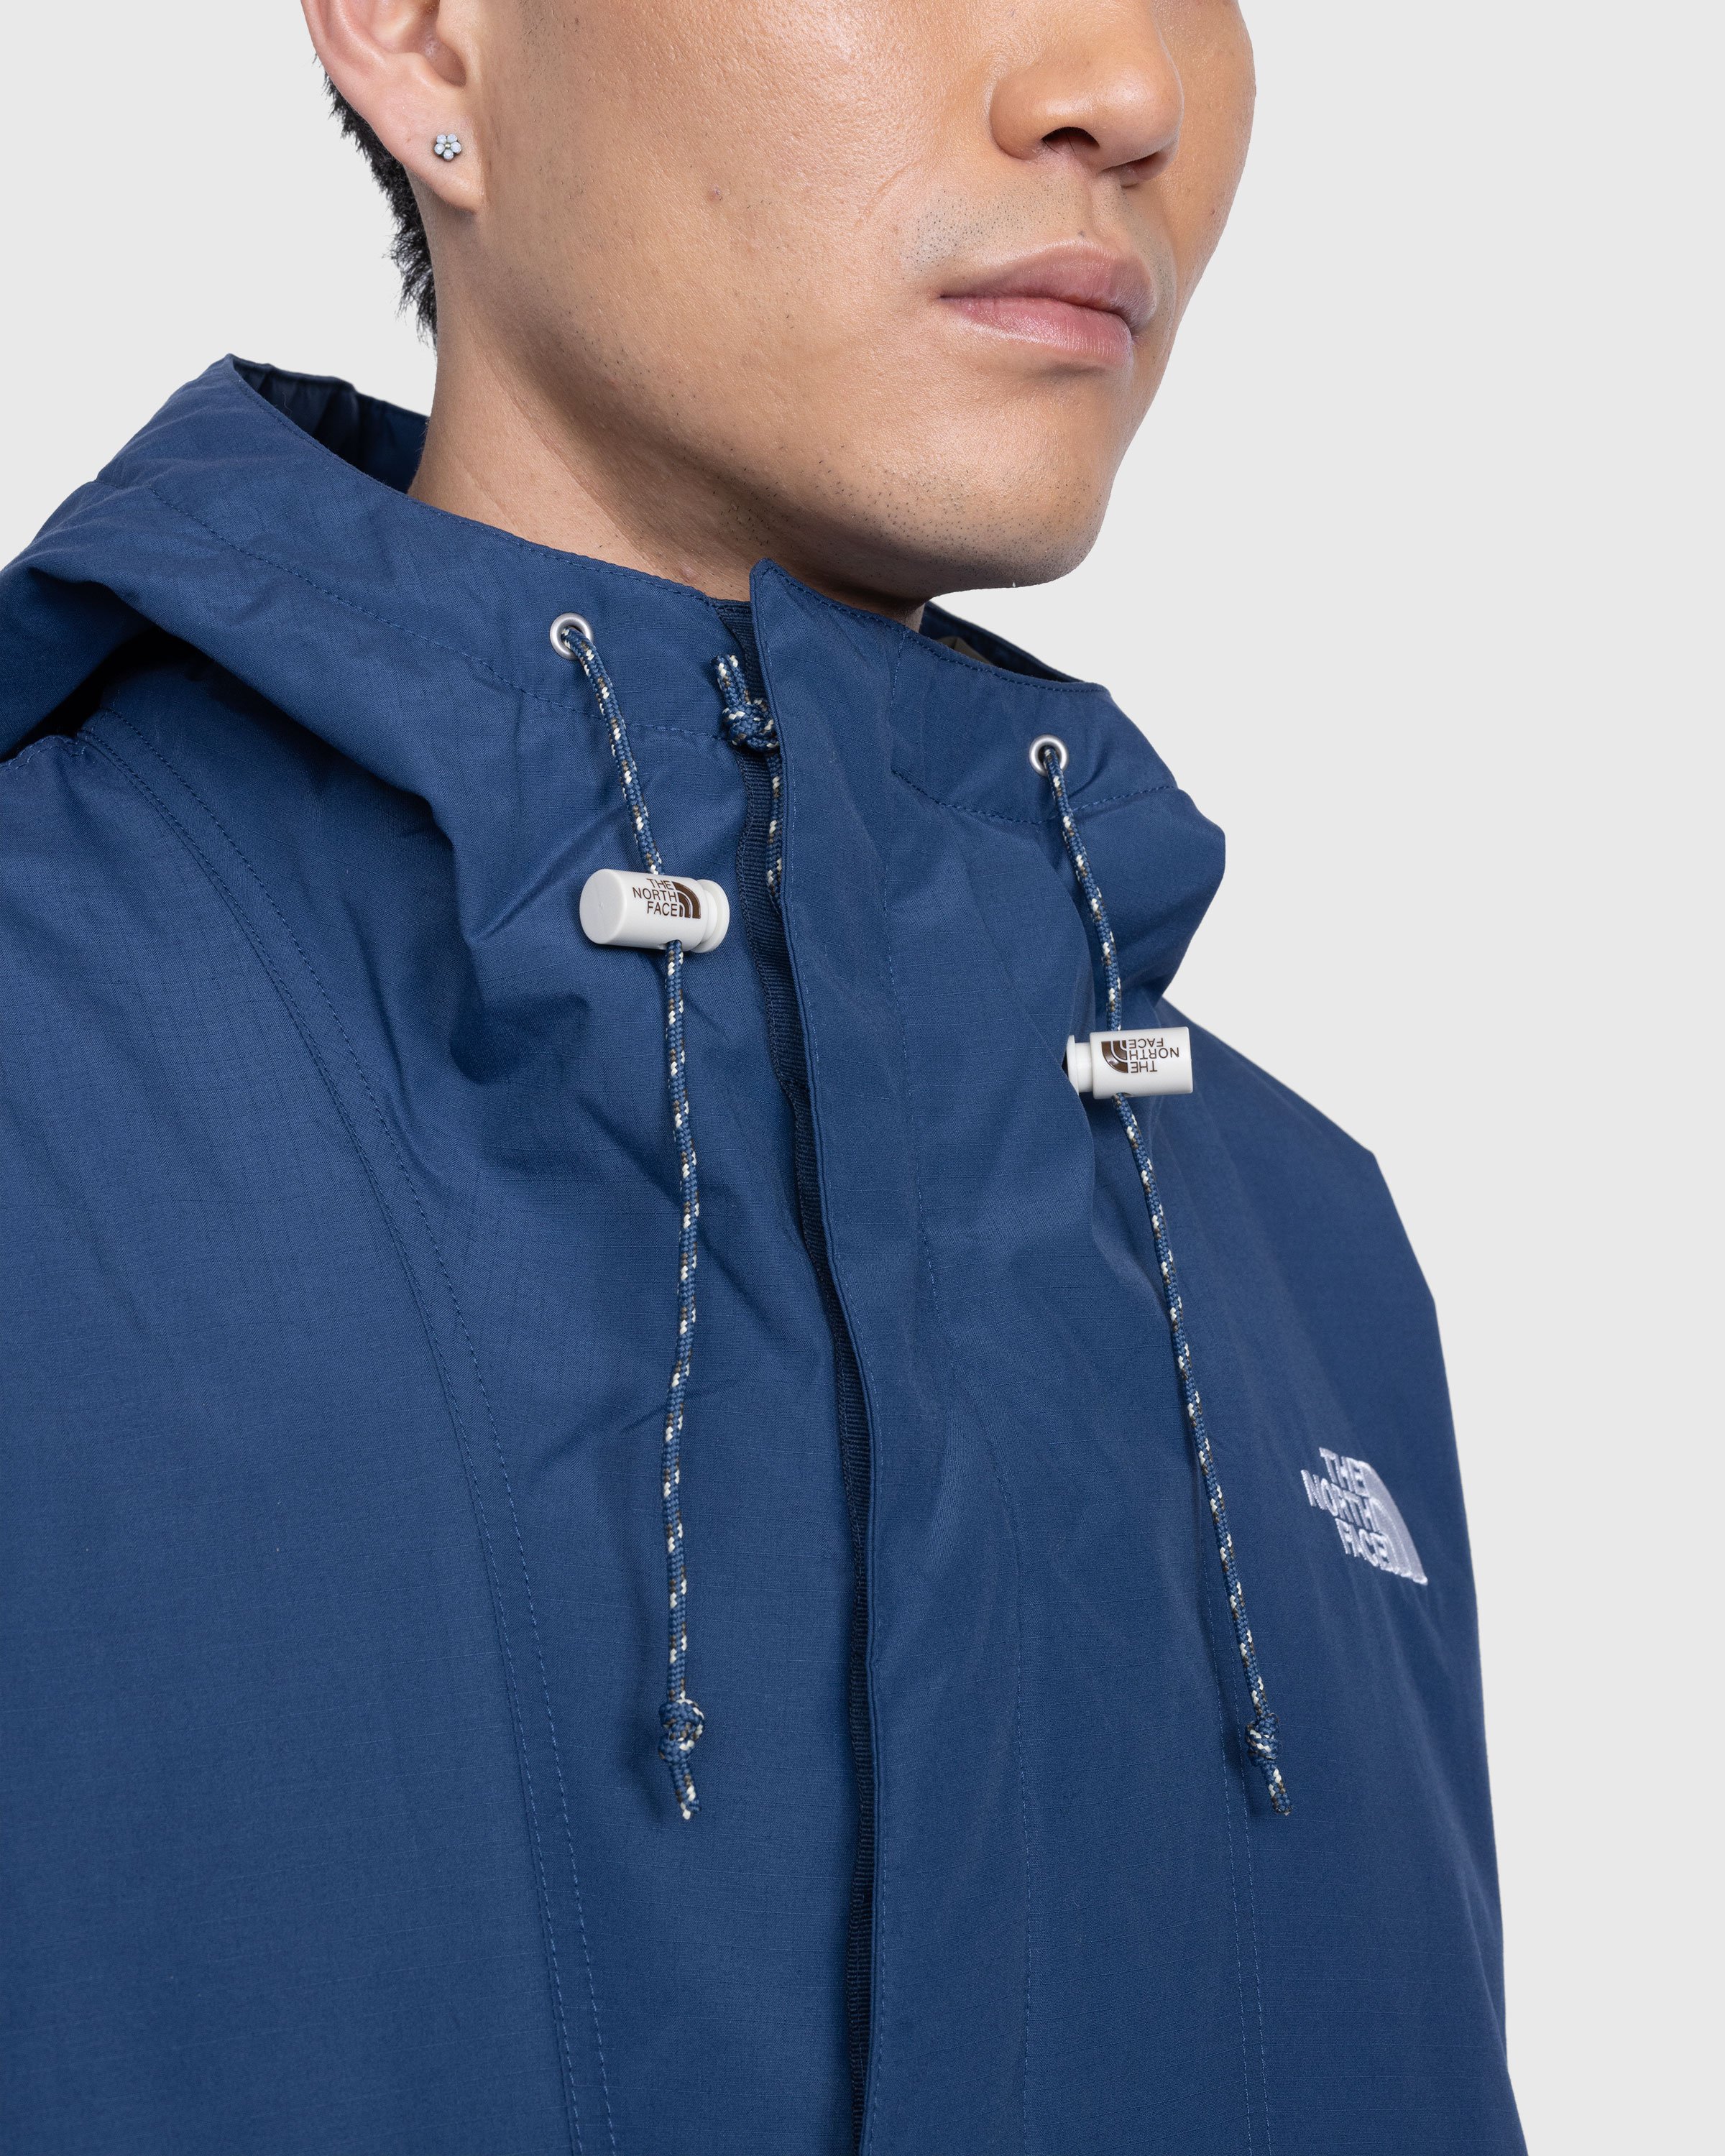 The North Face - ‘78 Low-Fi Hi-Tek Windjammer Multi - Clothing - Blue - Image 4